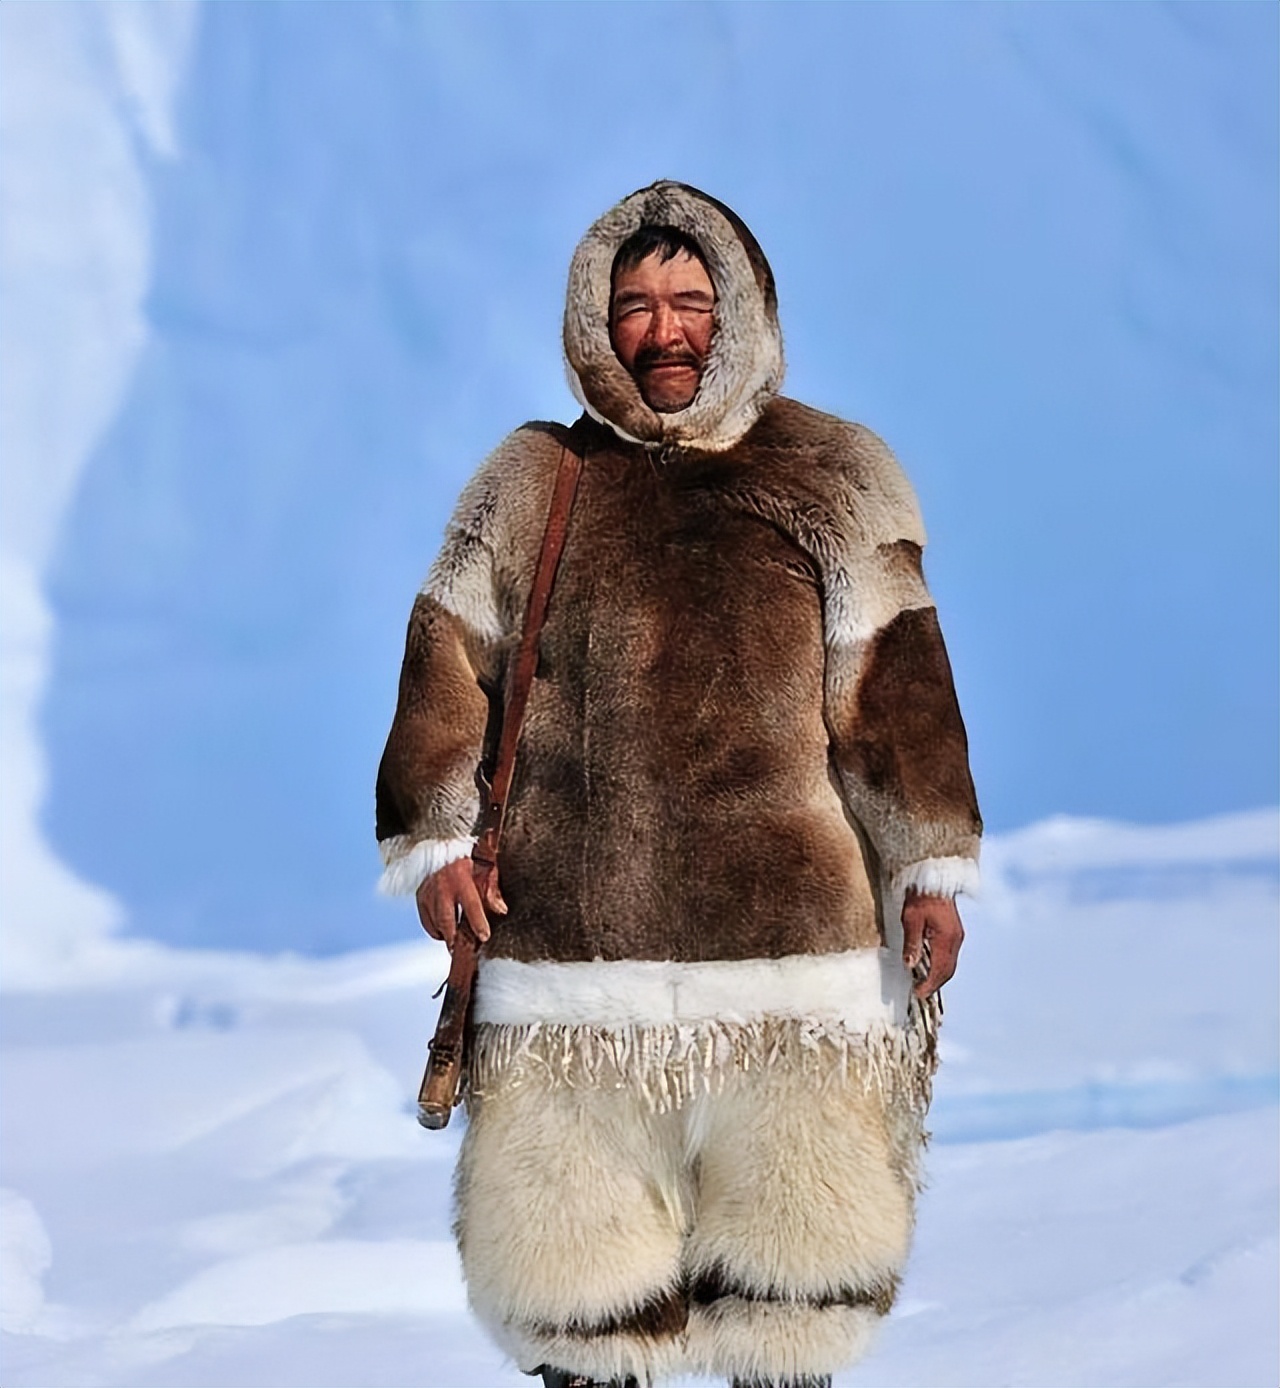 The Eskimo tradition of 